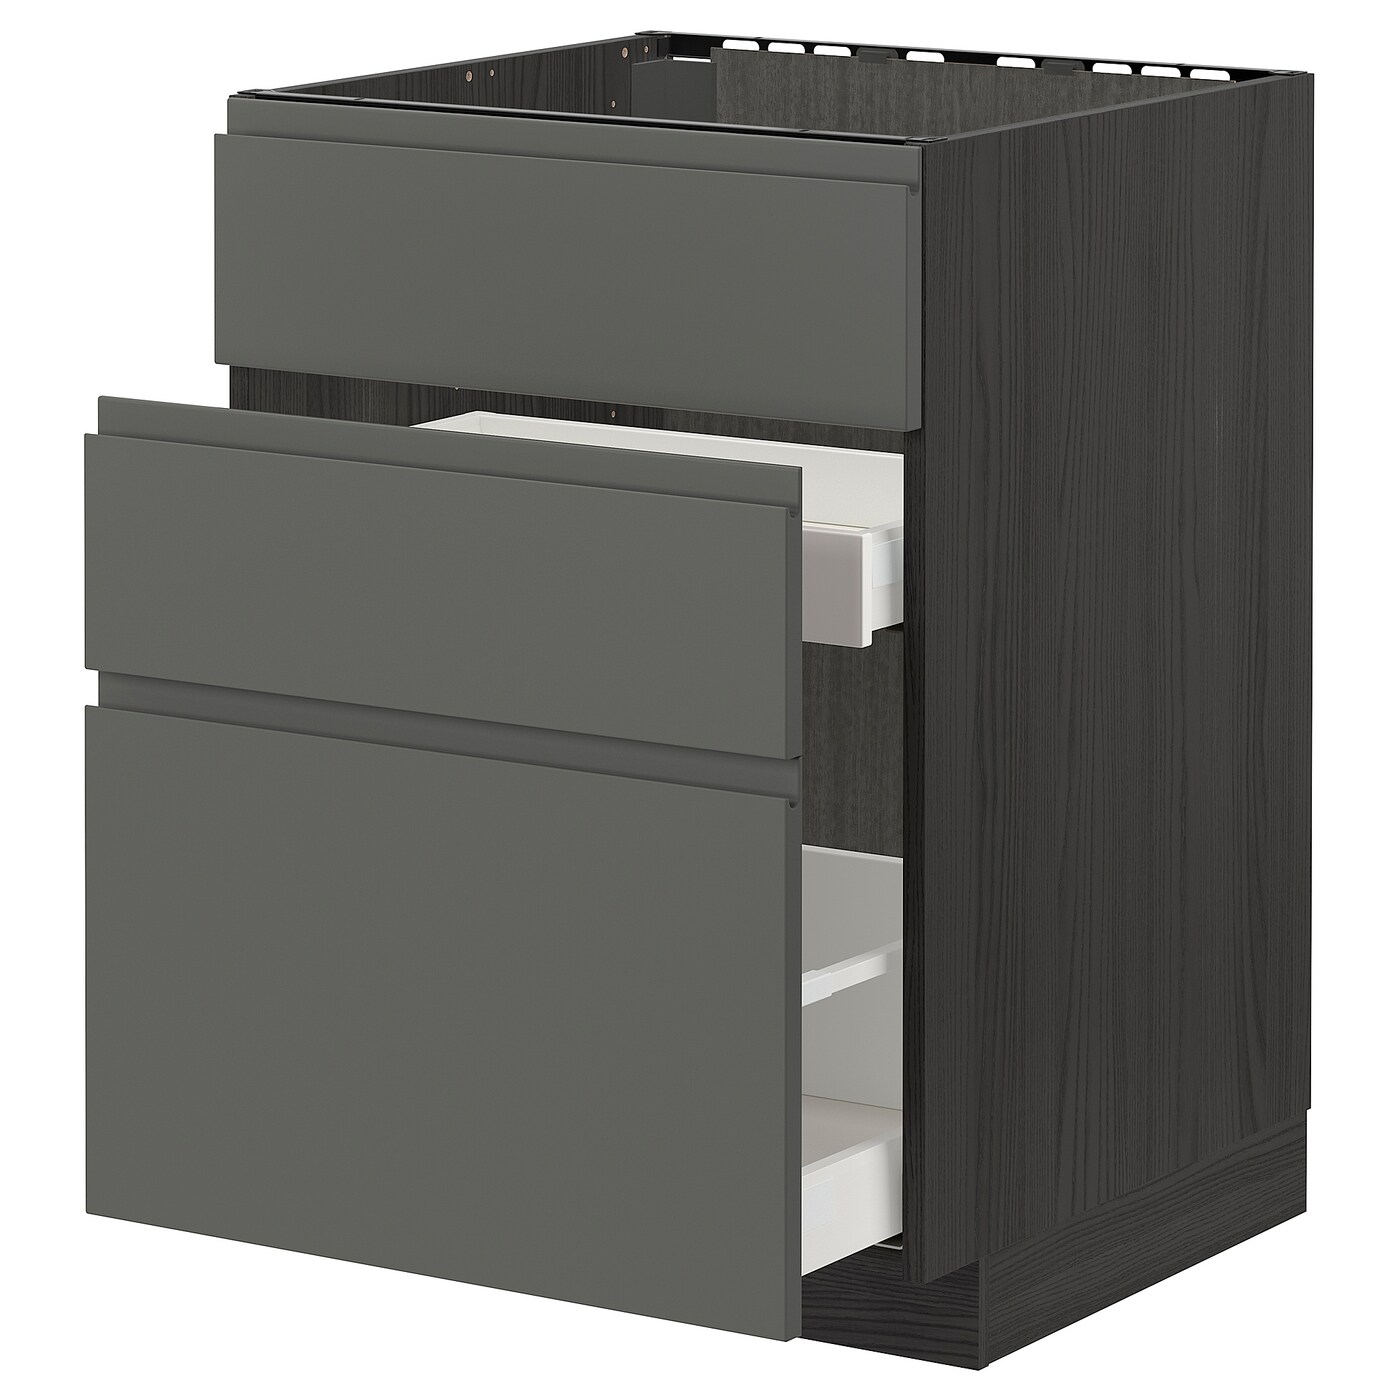 Кухонный шкаф  - IKEA METOD MAXIMERA, 88x62x60см, темно-серый/серый, МЕТОД МАКСИМЕРА ИКЕА